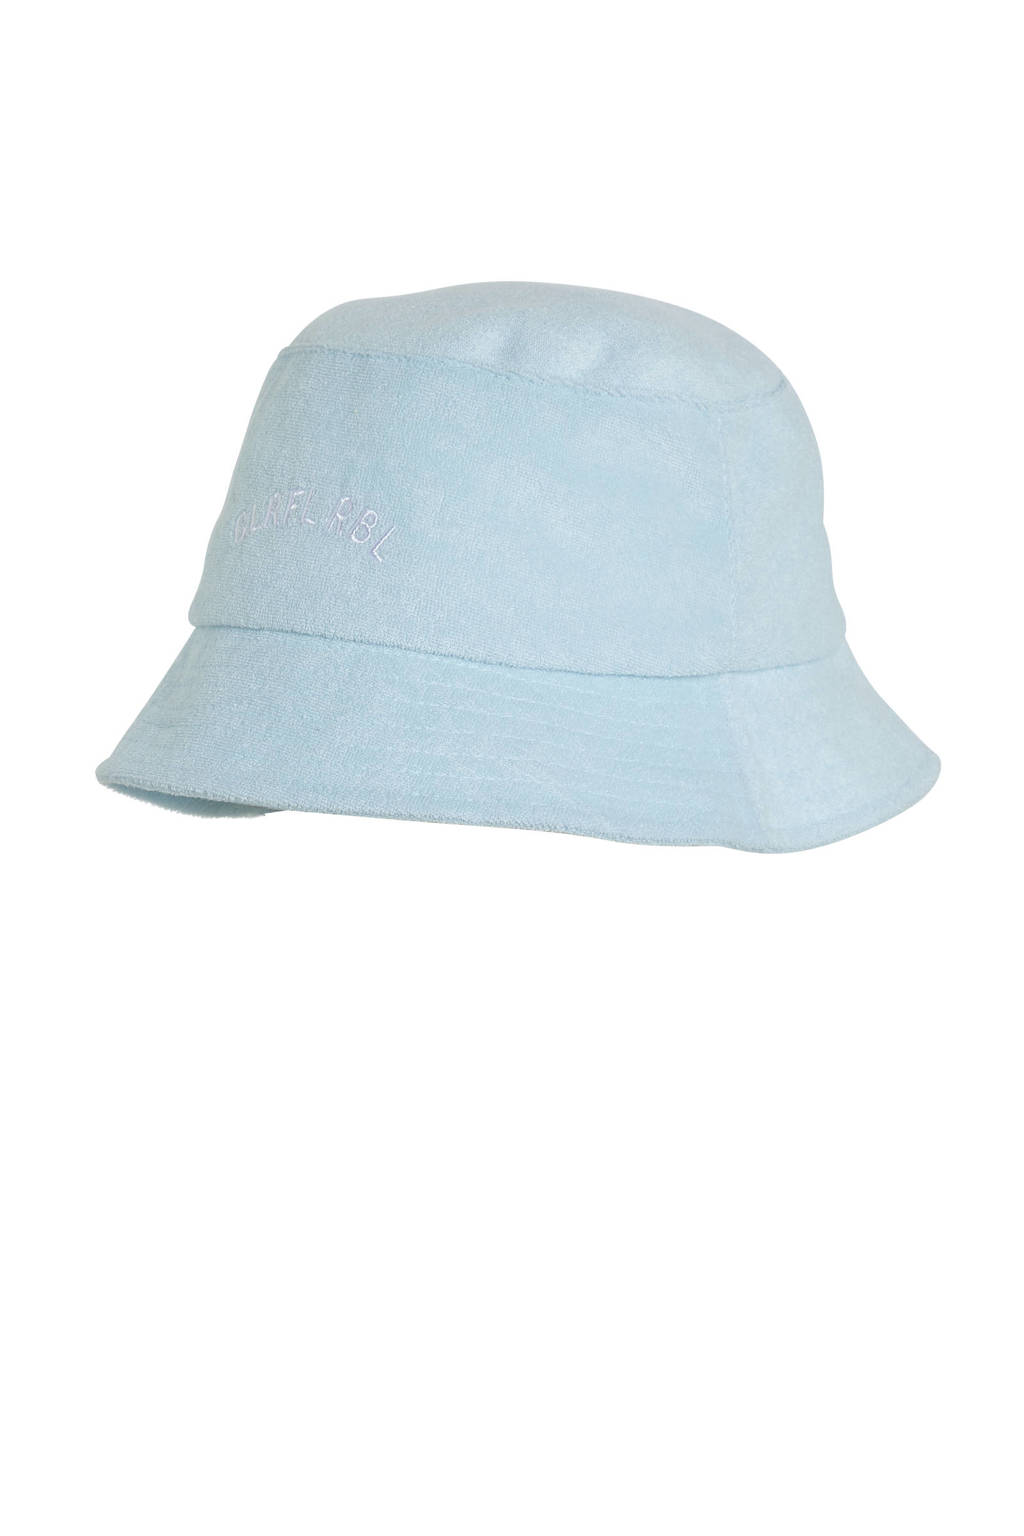 Colourful Rebel bucket hat Celia French met logo lichtblauw